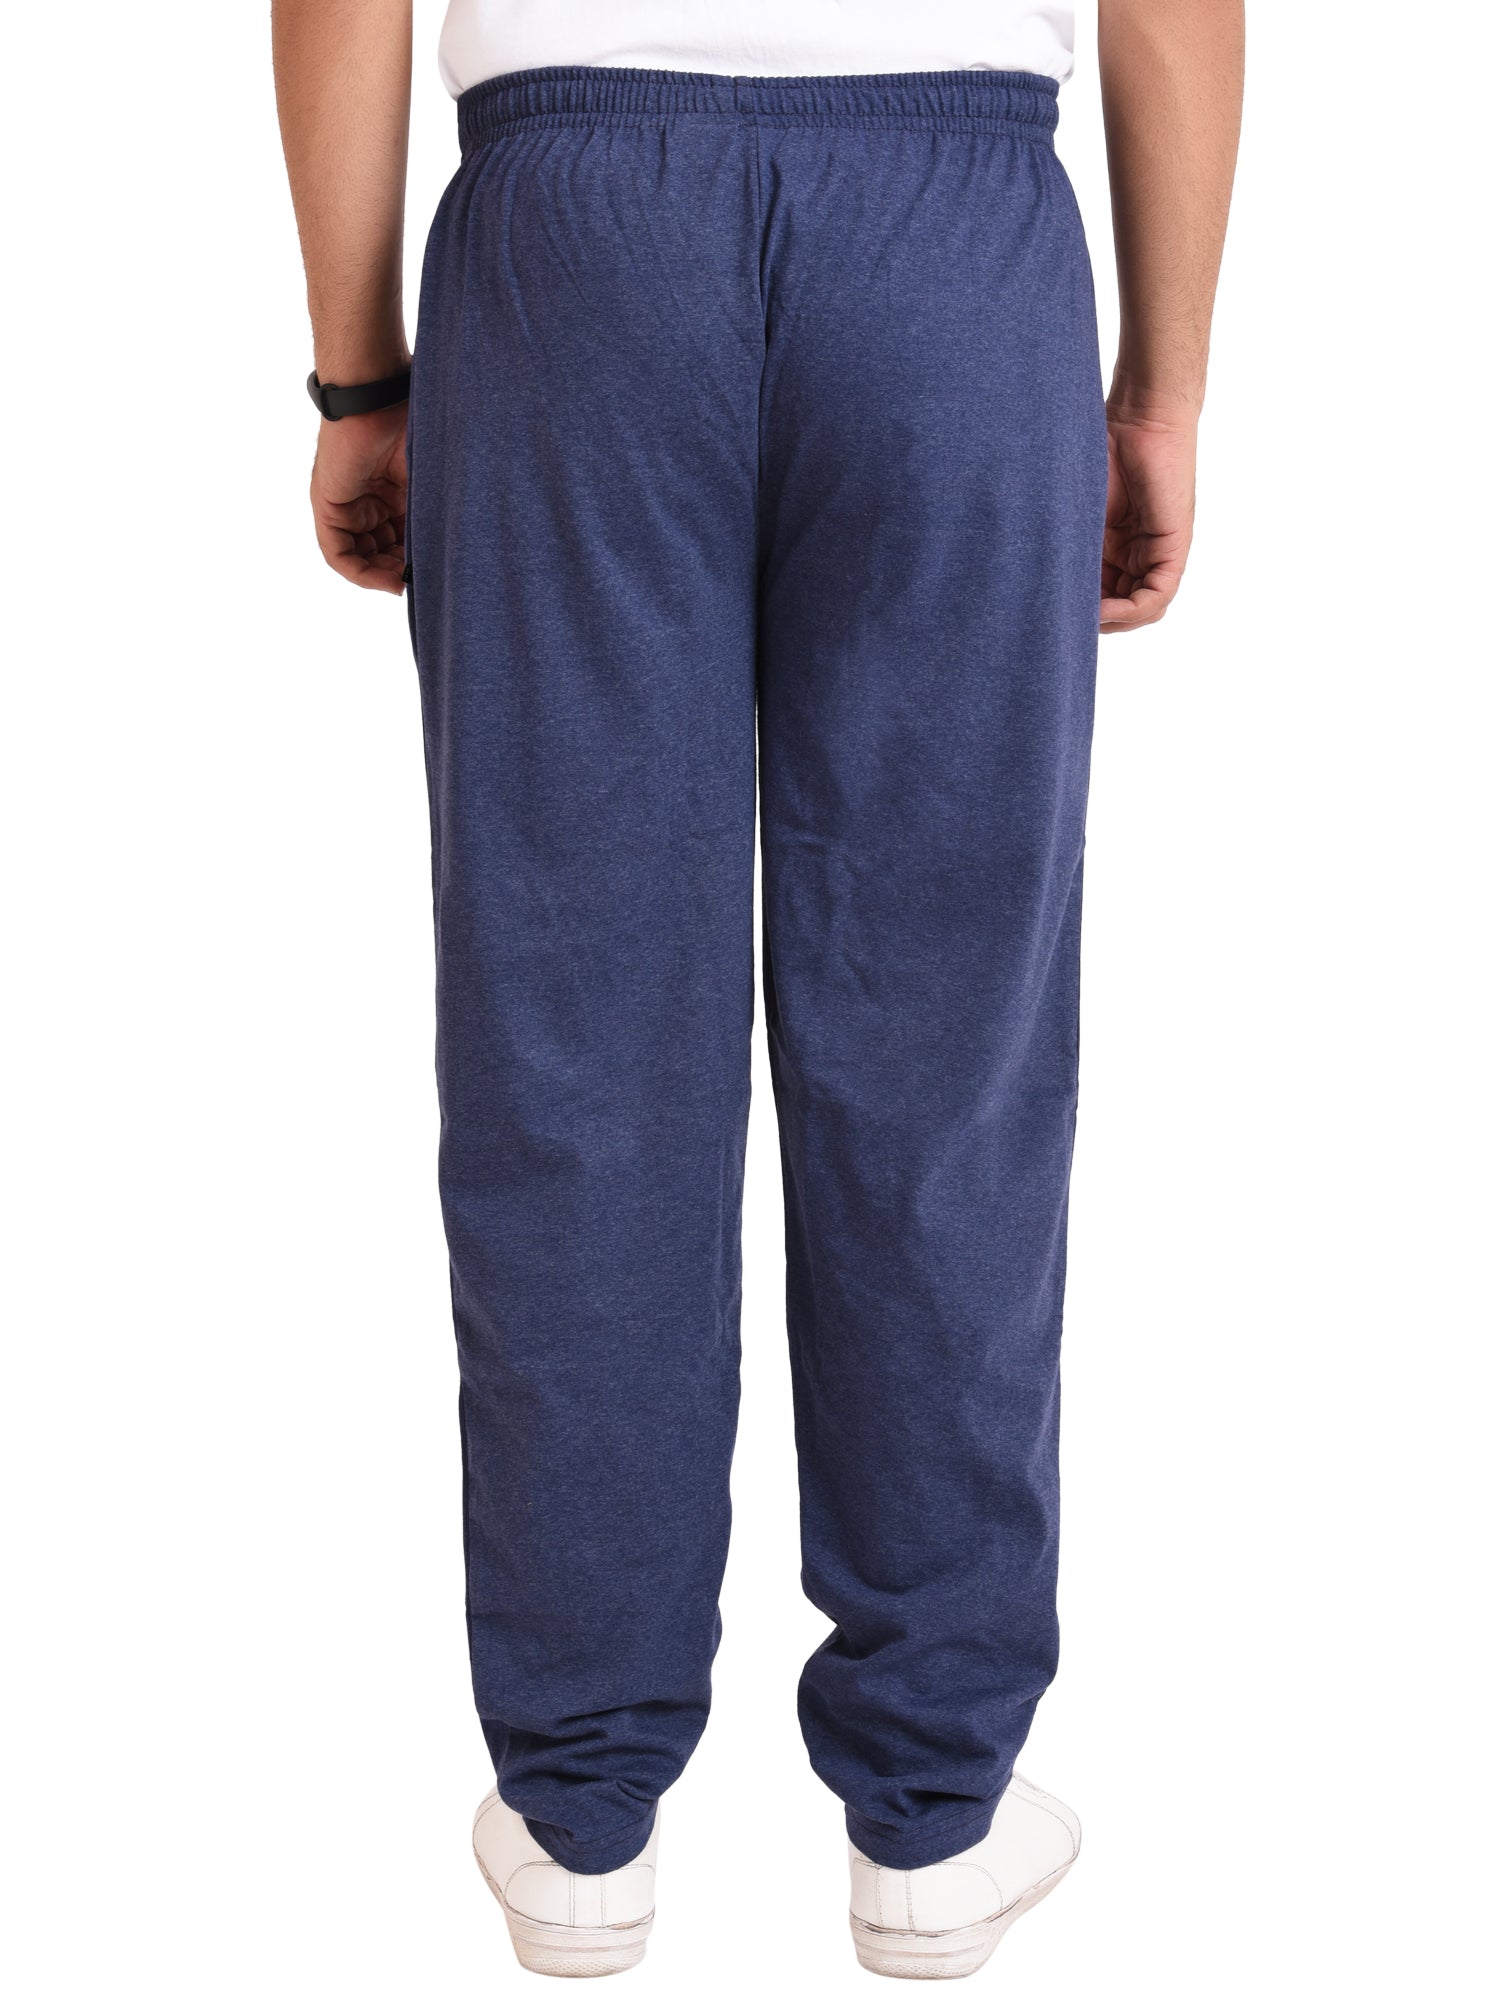 Hynak Men's Cotton Track Pants| Regular Fitting | Pack Of 2 Multi-Colour